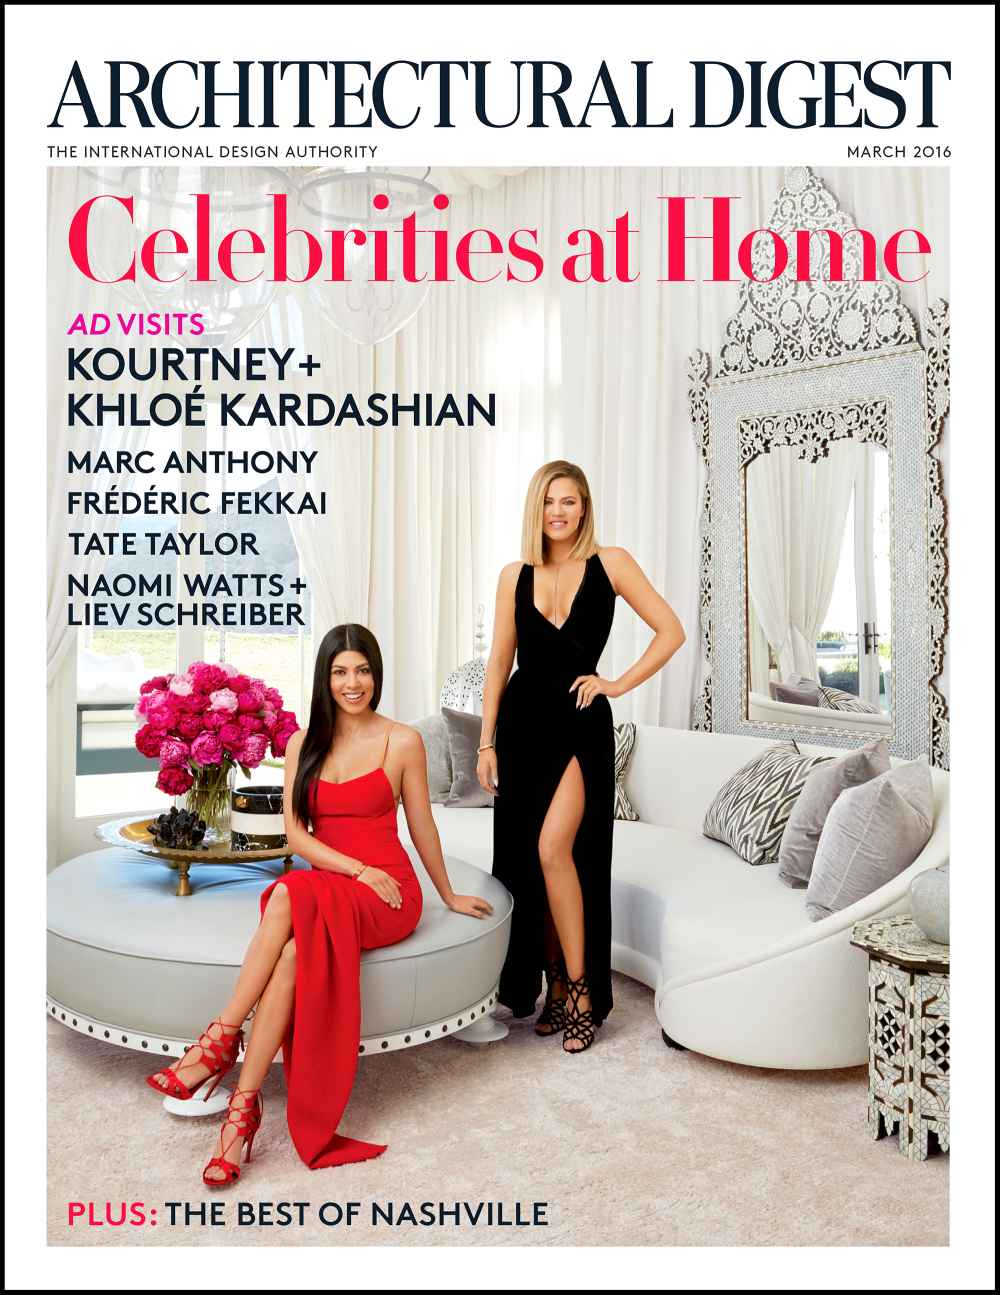 Kourtney Kardashian and Khloe Kardashian